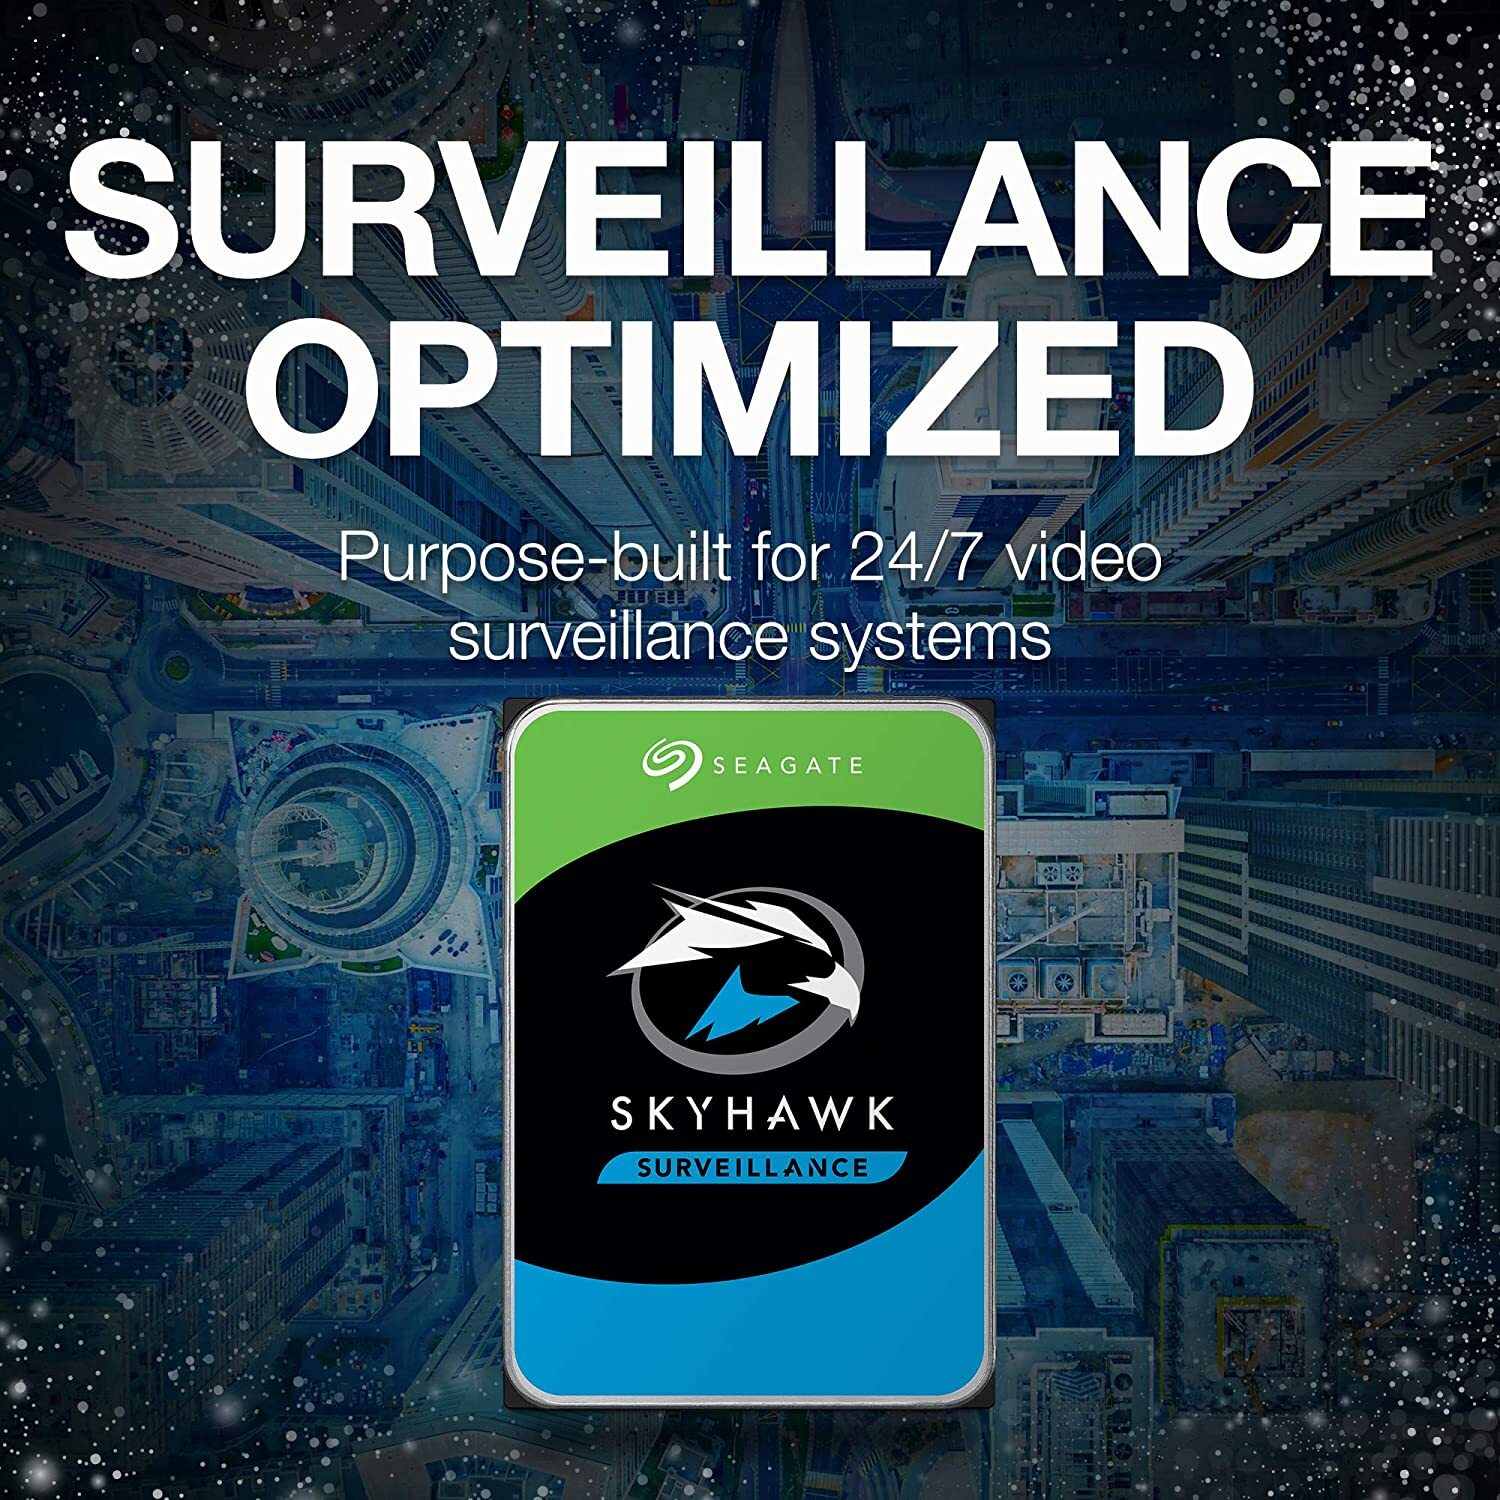 Seagate SkyHawk 6TB Surveillance Hard Drive SATA 6Gb/s 128MB Cache Internal Drive, 3.5 Inch (ST6000VX0023)